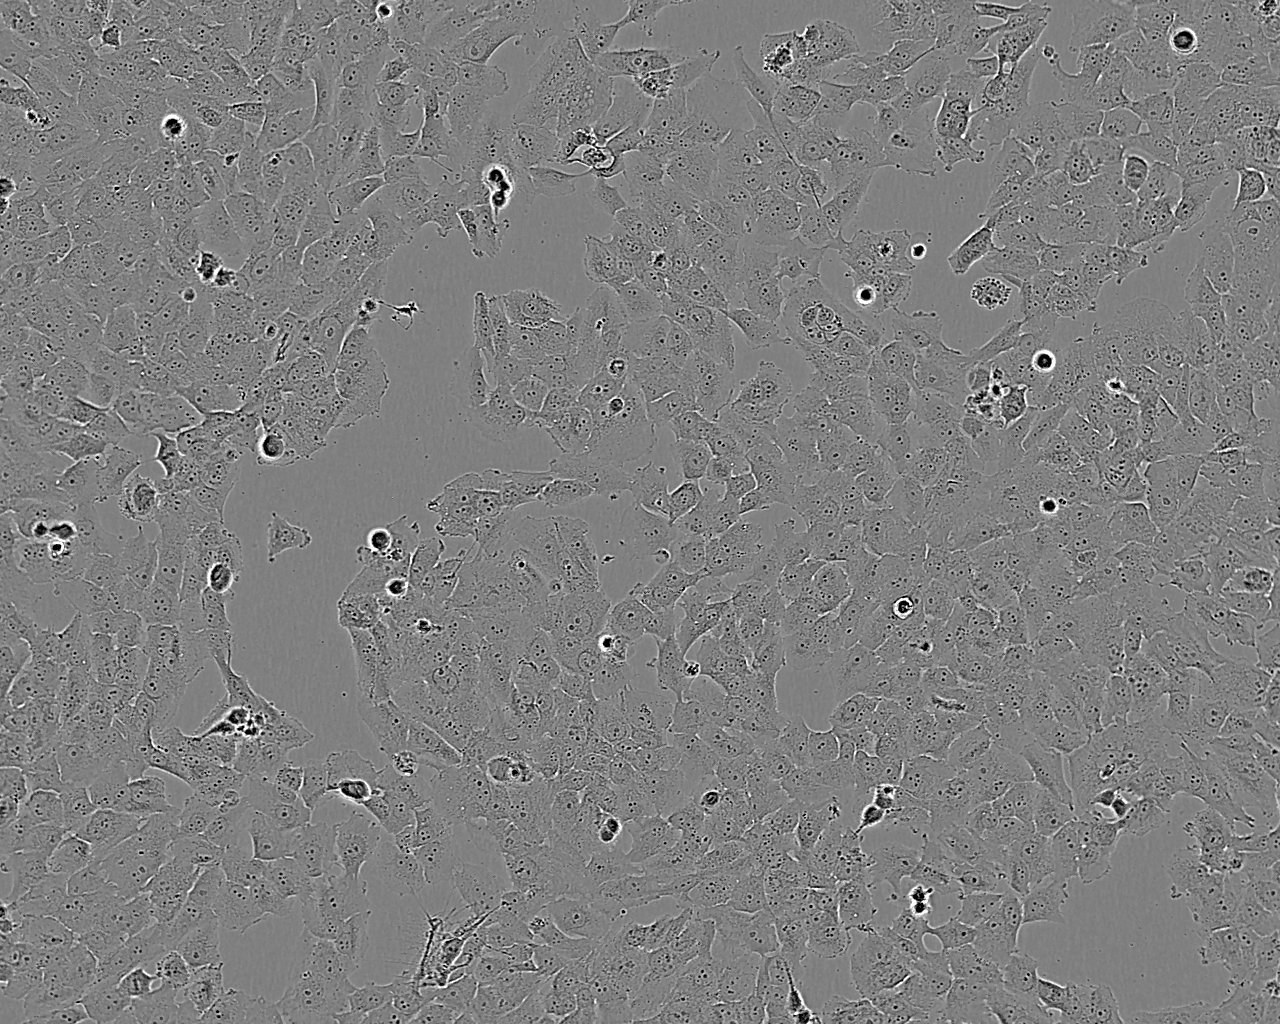 NCI-H1975 epithelioid cells人肺腺癌细胞系,NCI-H1975 epithelioid cells